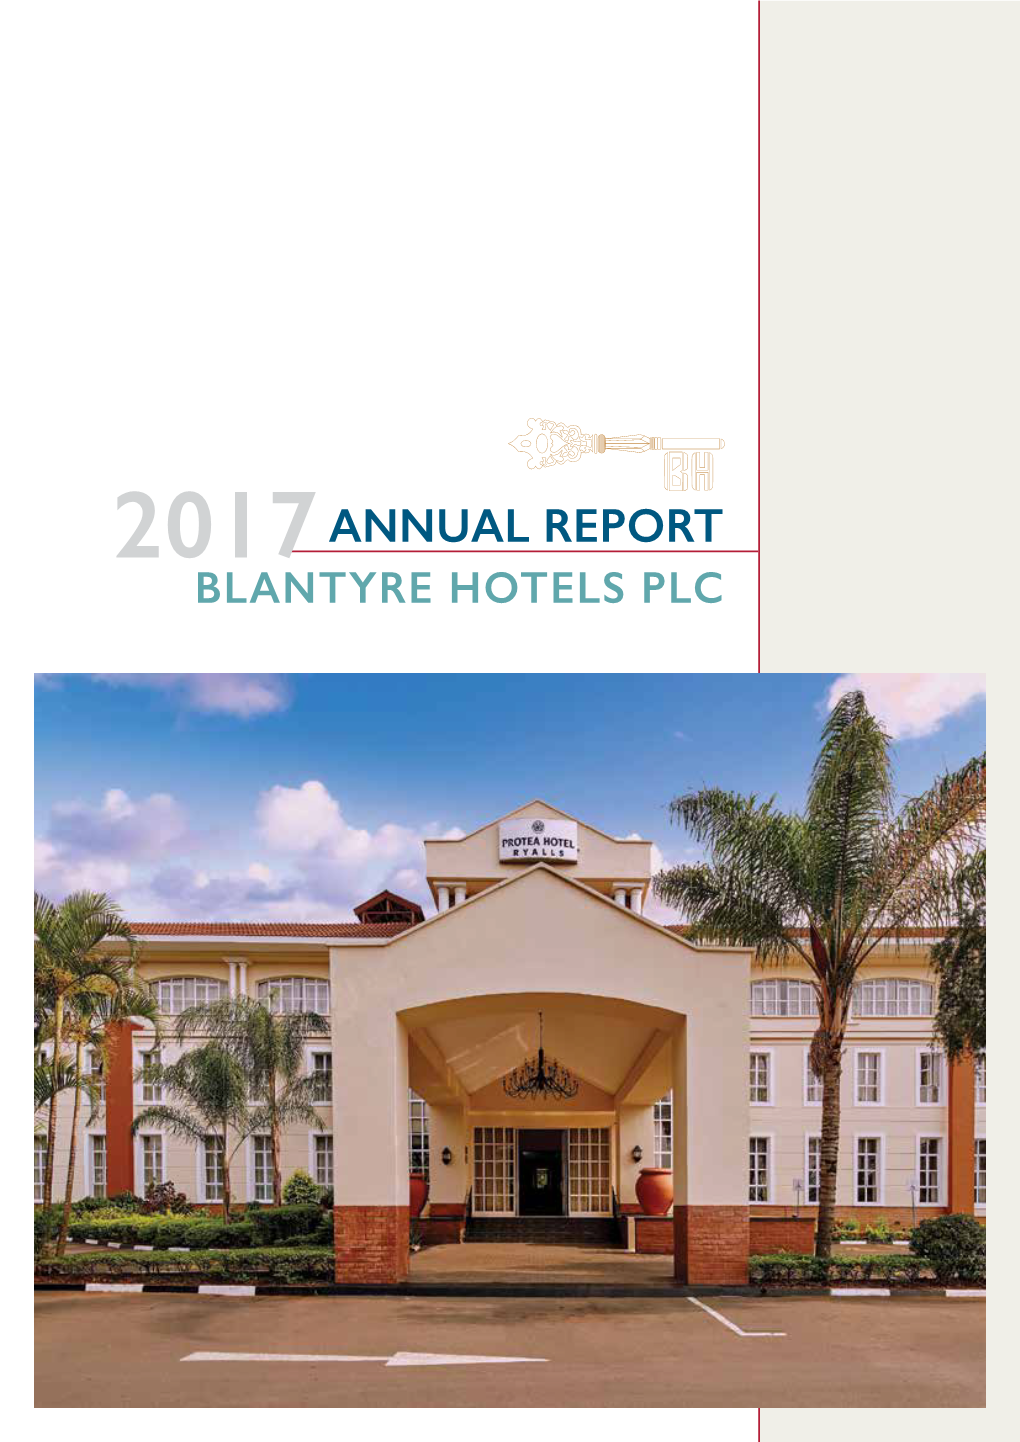 ANNUAL REPORT BLANTYRE HOTELS PLC BLANTYRE HOTELS PLC Annual Report 2017 2